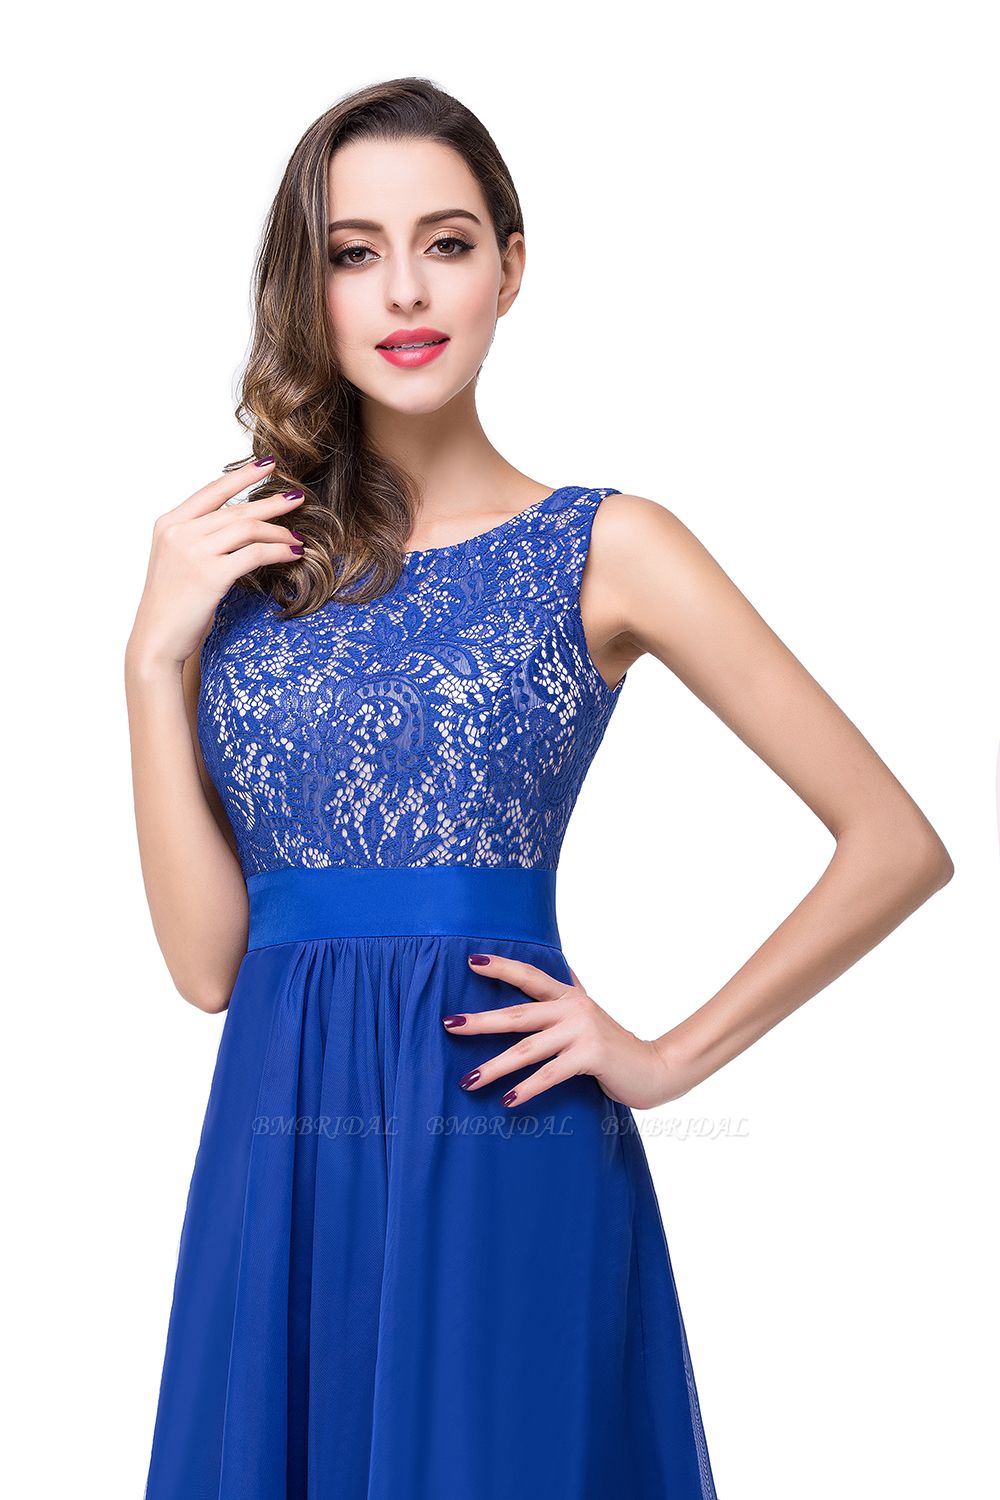 BMbridal Exquisite A-line Chiffon Royal Blue Bridesmaid Dress with Lace ...